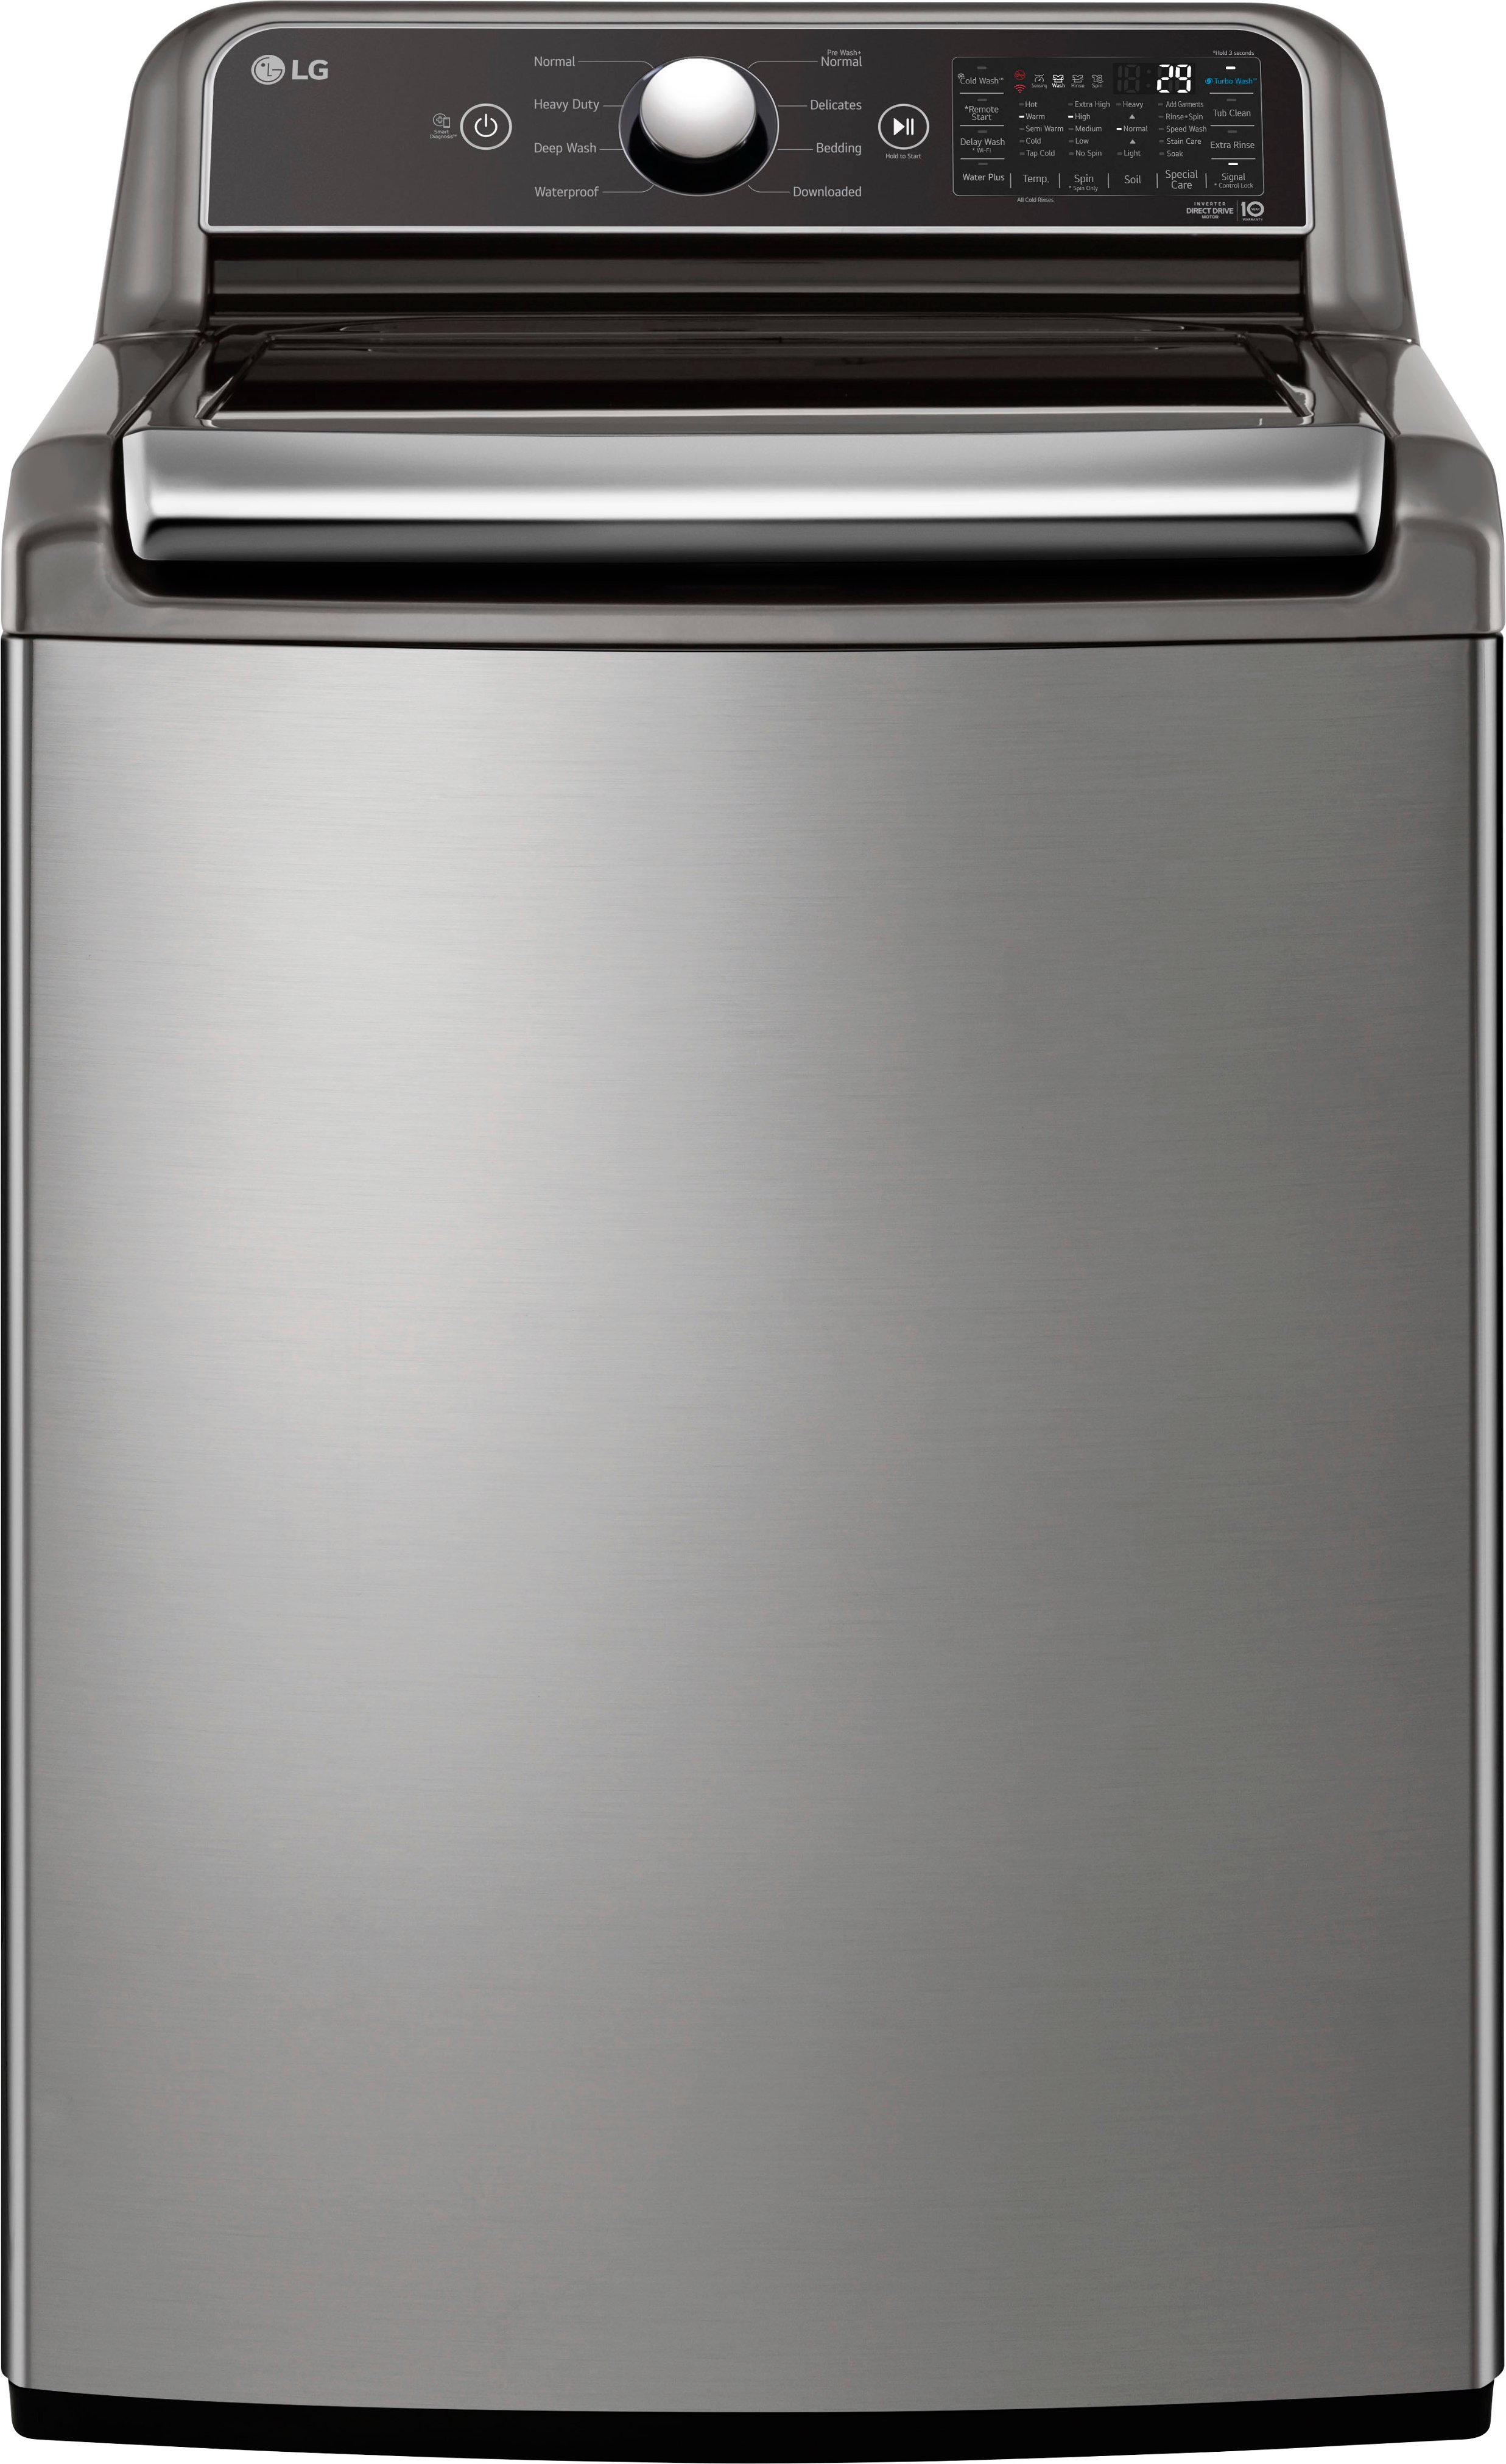 LG 5.5 Cu. Ft. High Efficiency Smart Top Washer with Steel WT7400CV - Buy